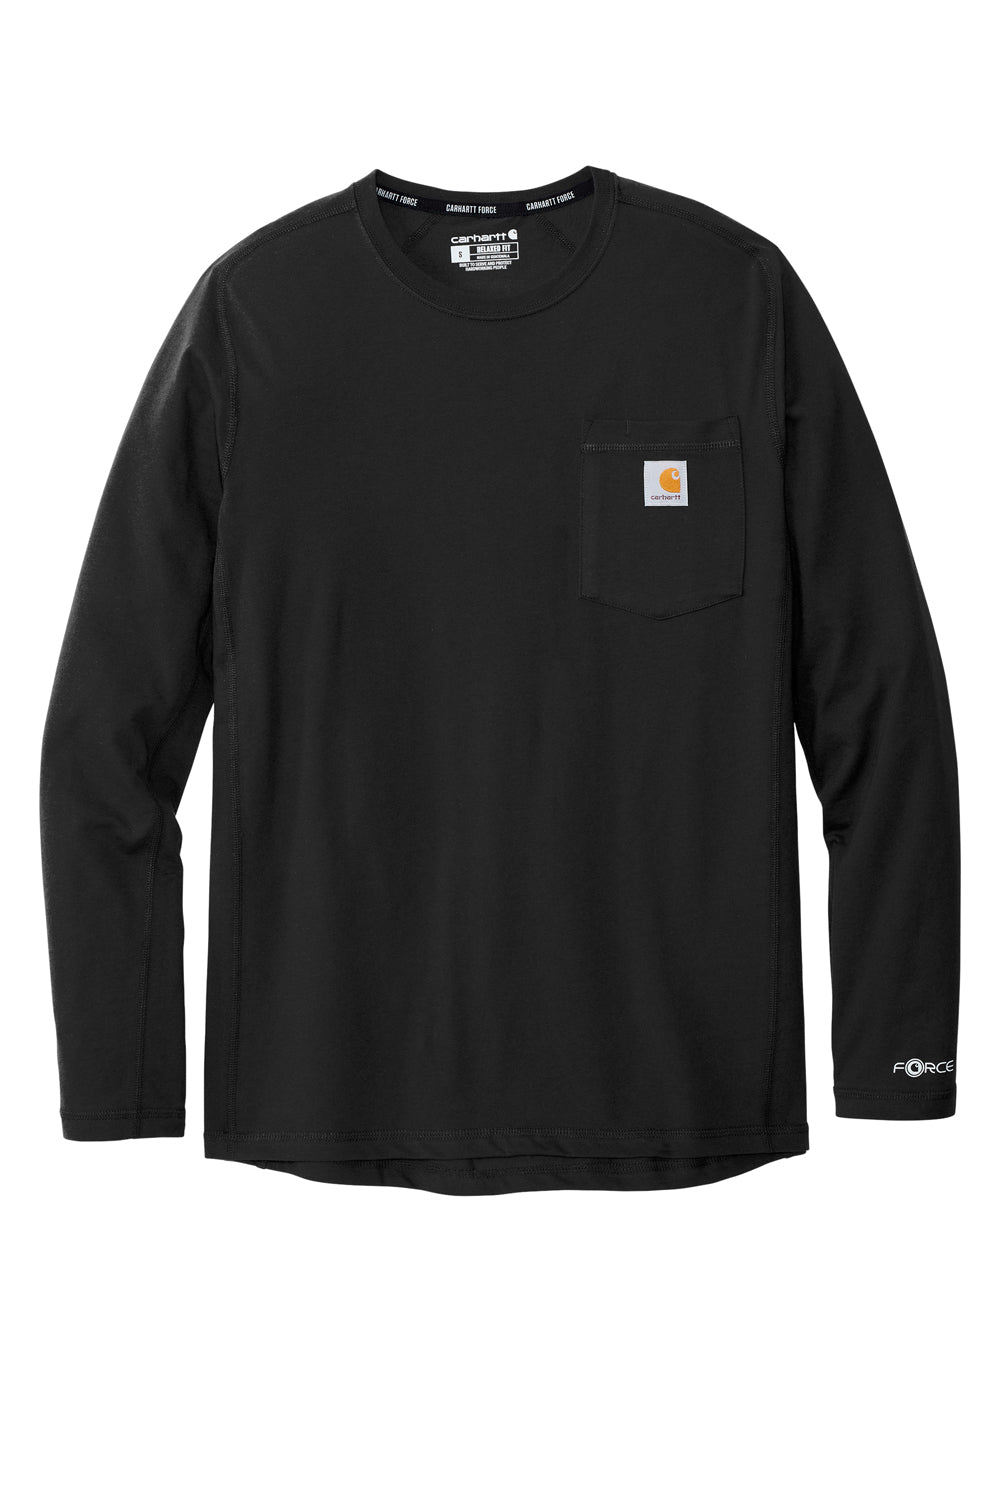 Carhartt CT104617 Mens Force Moisture Wicking Long Sleeve Crewneck T-Shirt w/ Pocket Black Flat Front